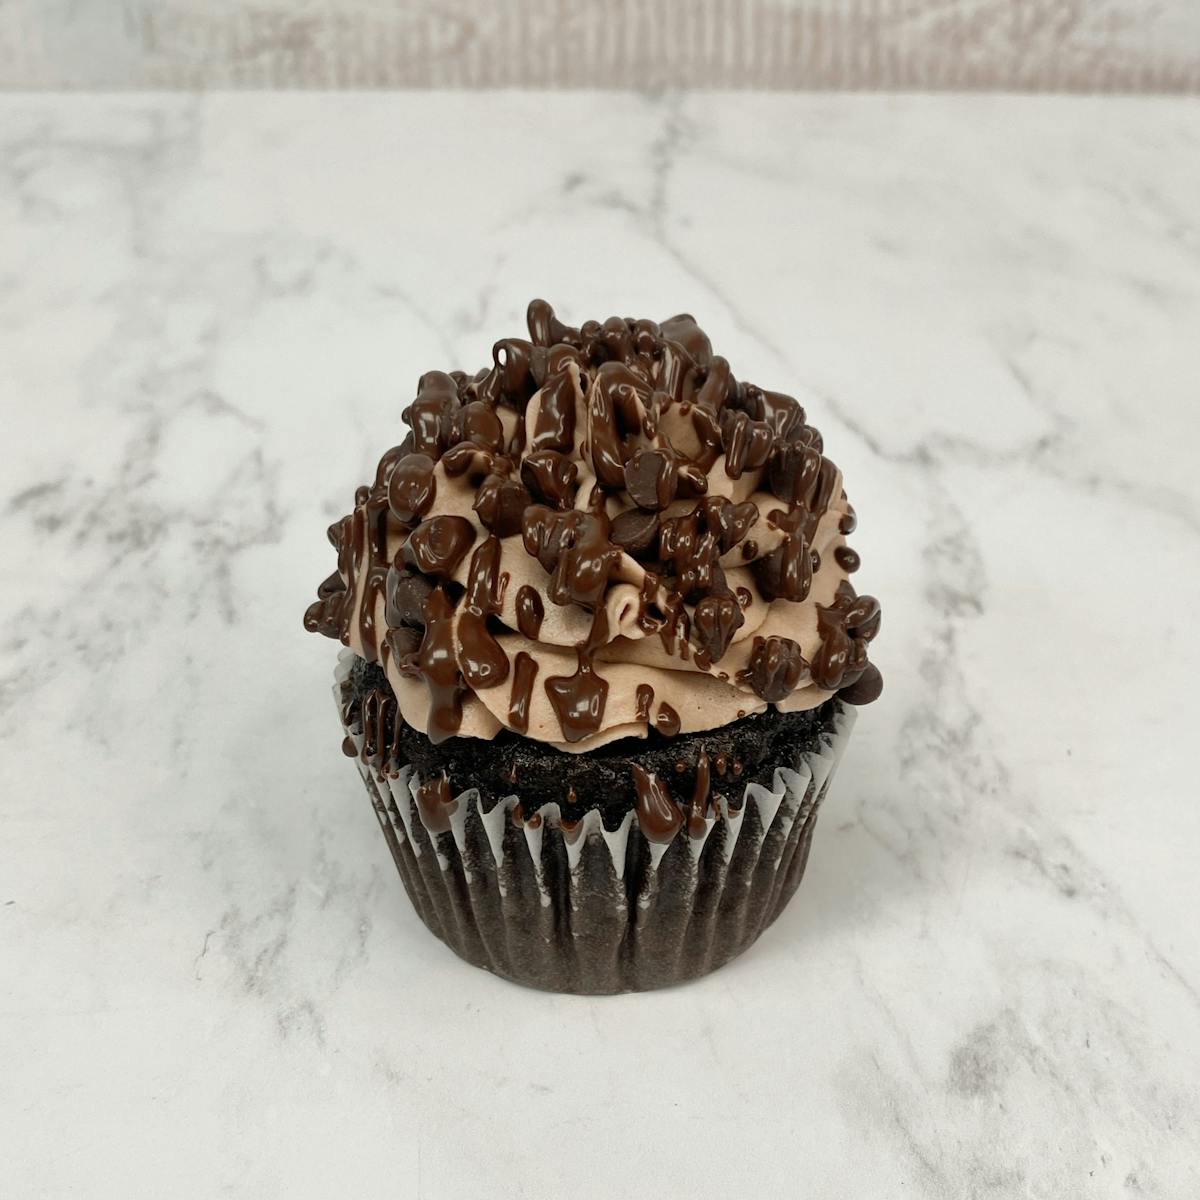 a chocolate cupcake